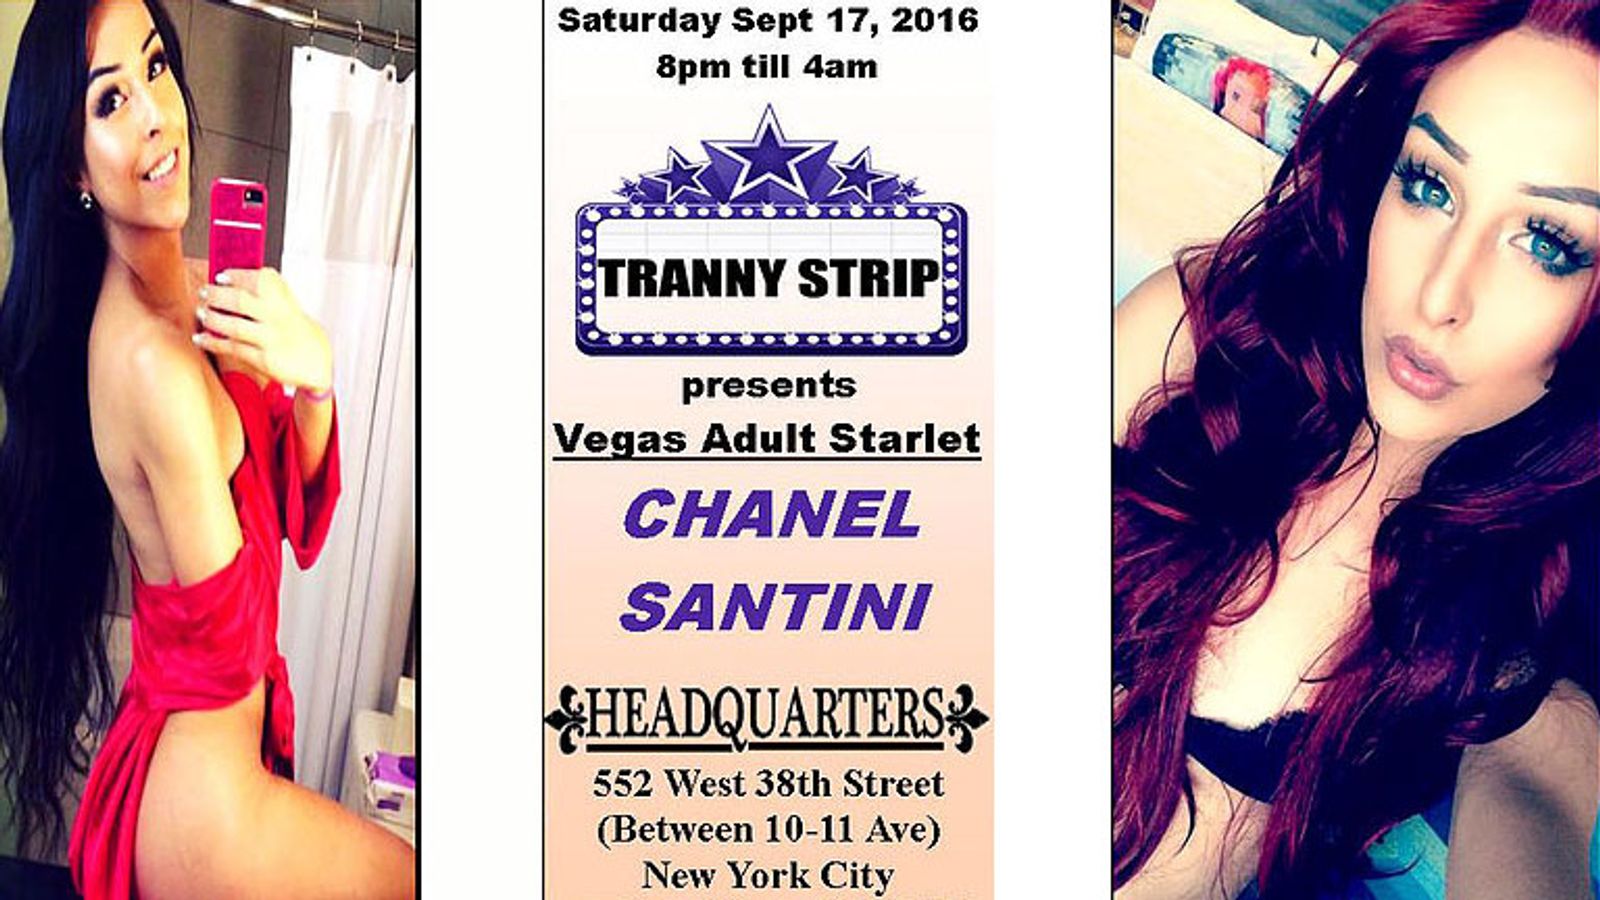 TS Chanel Santini to Host Tranny Strip Saturday in NYC